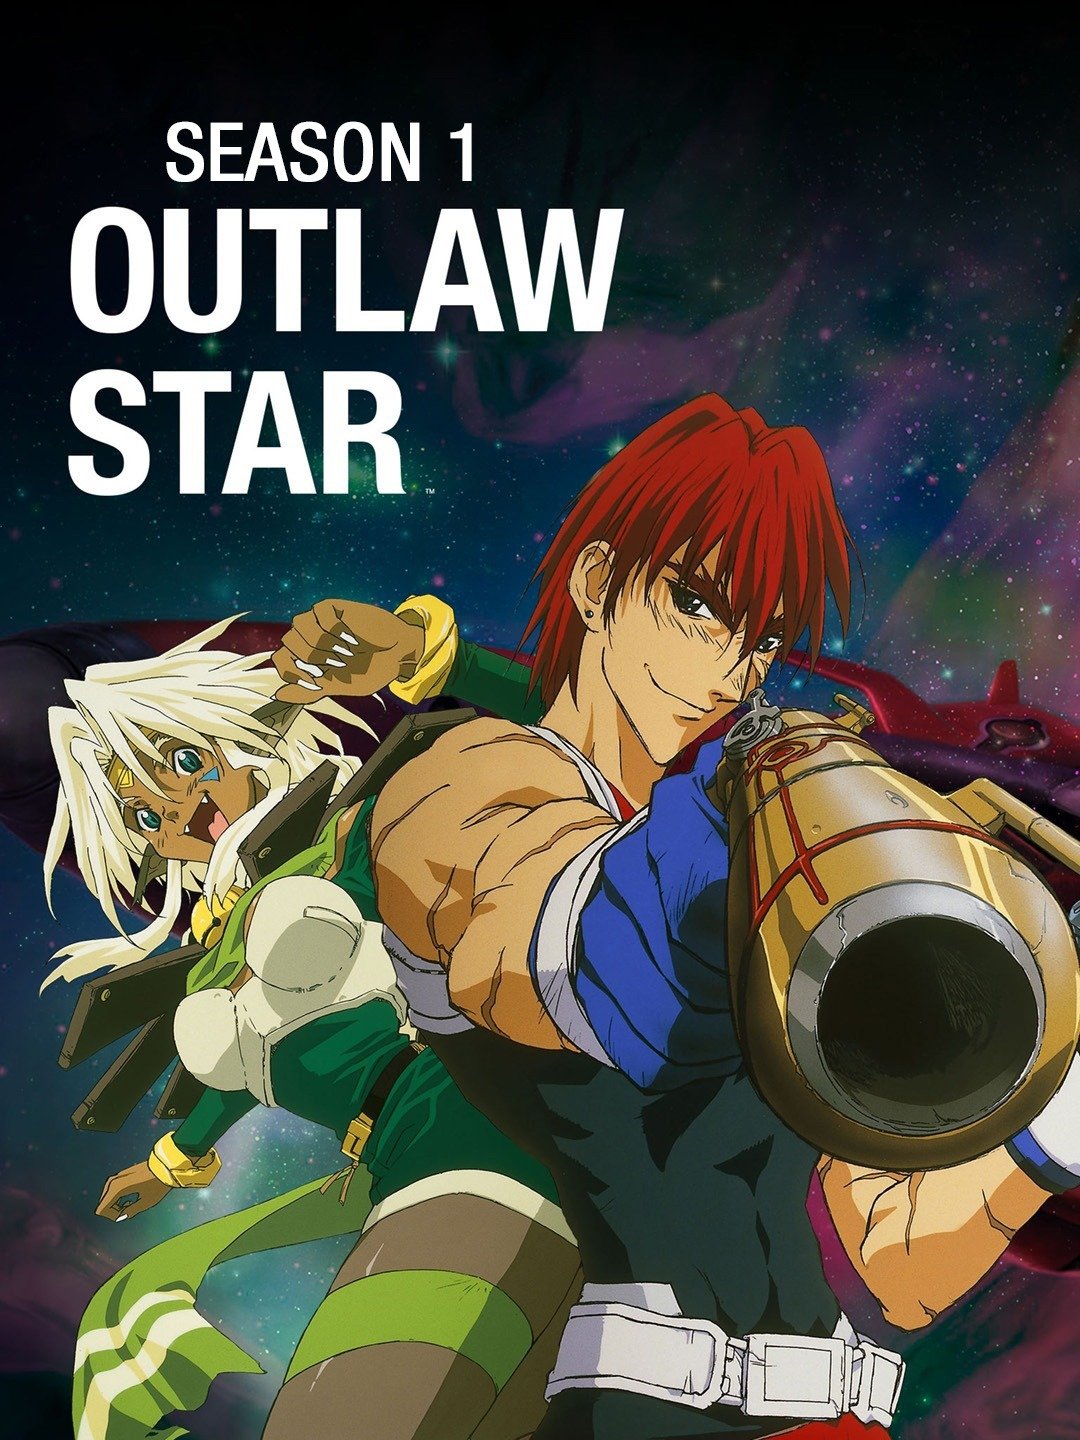 Outlaw Star  Bluray Trailer  YouTube